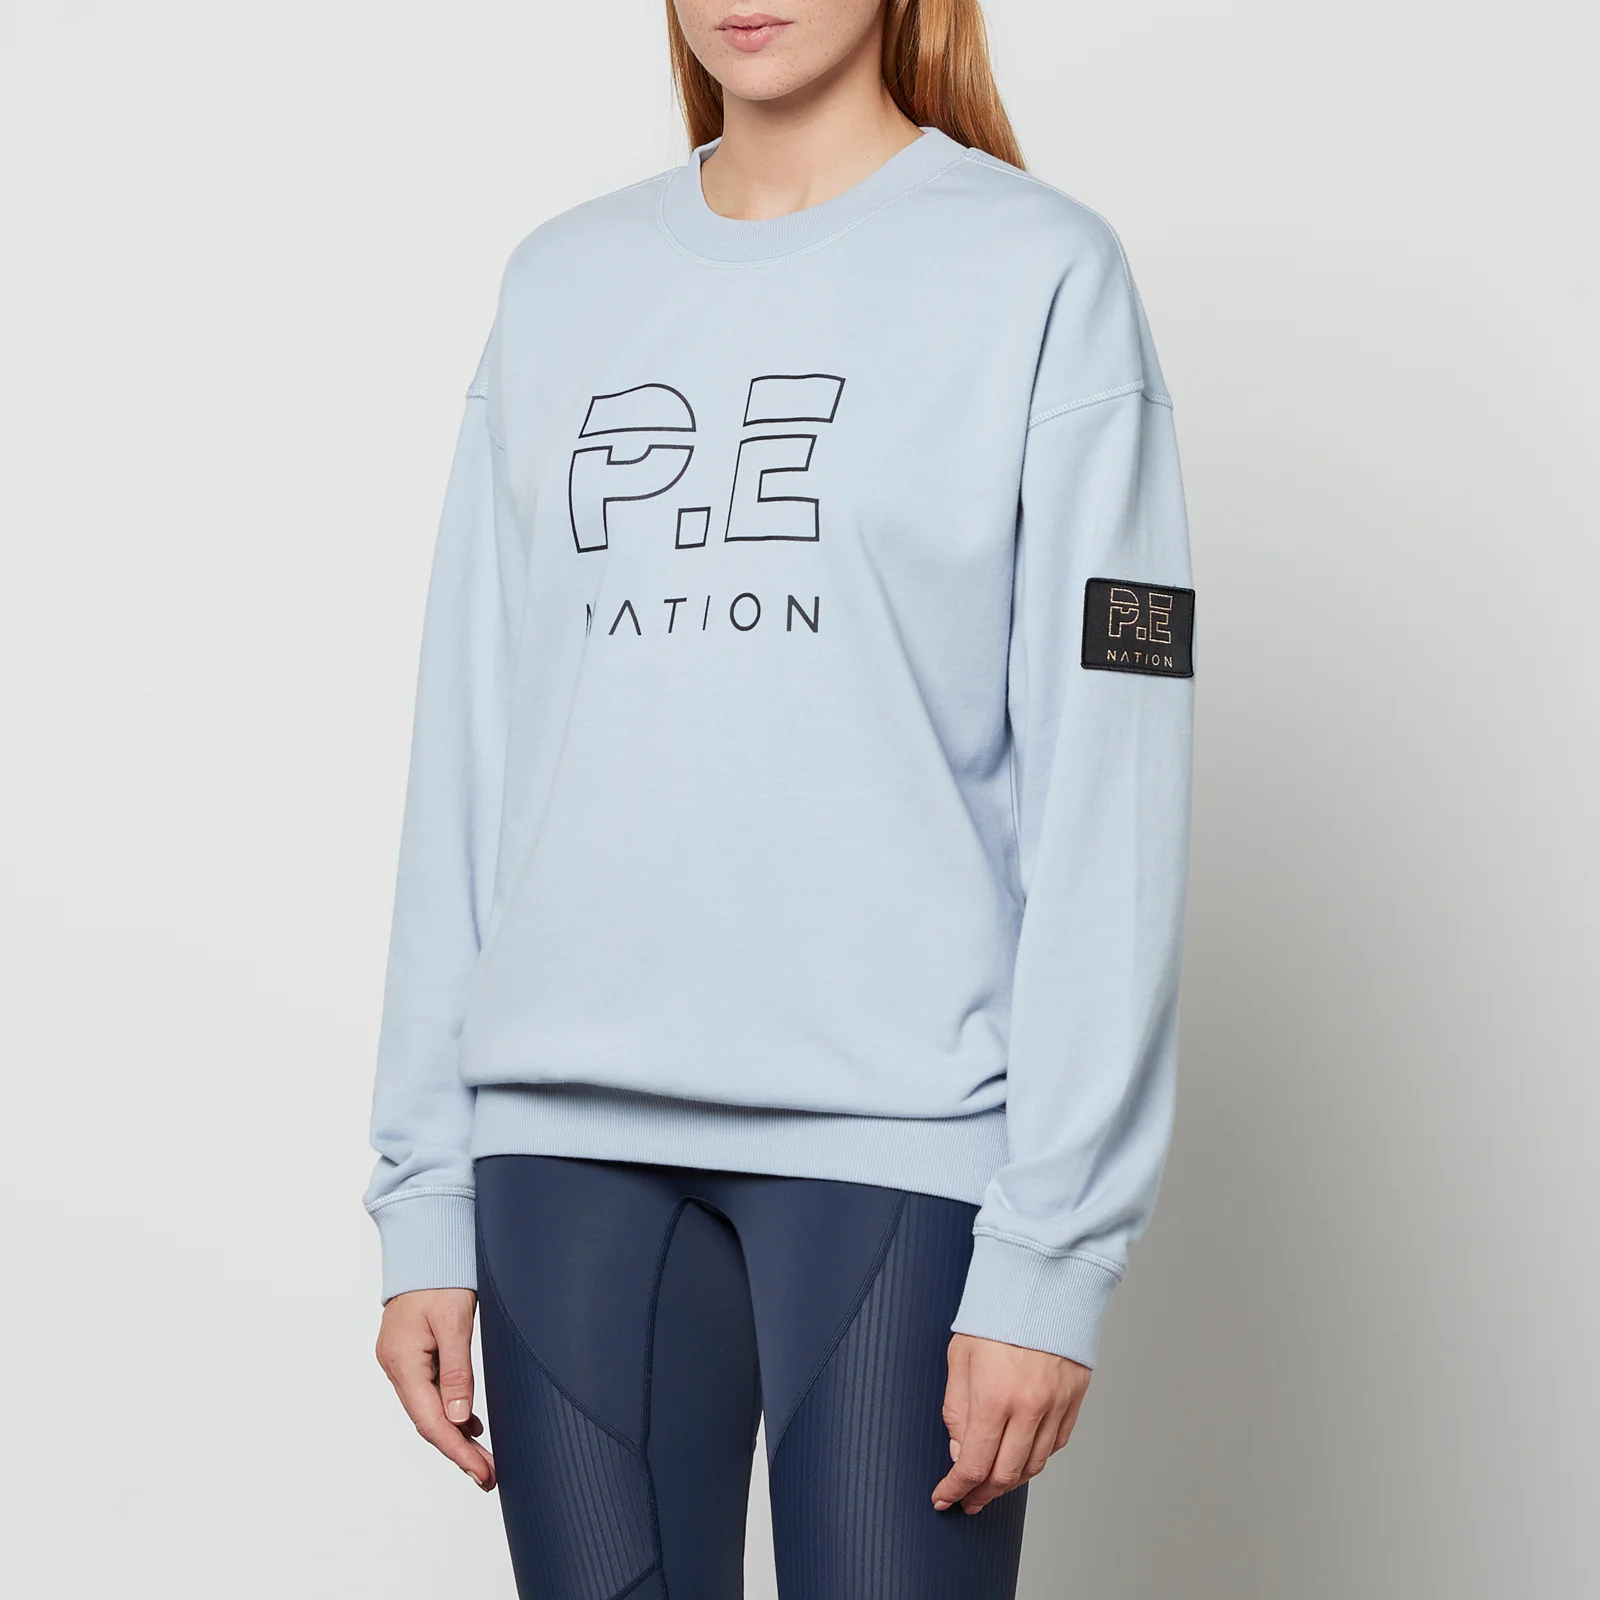 P.E Nation Heads Up Loopback Organic Cotton-Jersey Sweatshirt Image 1